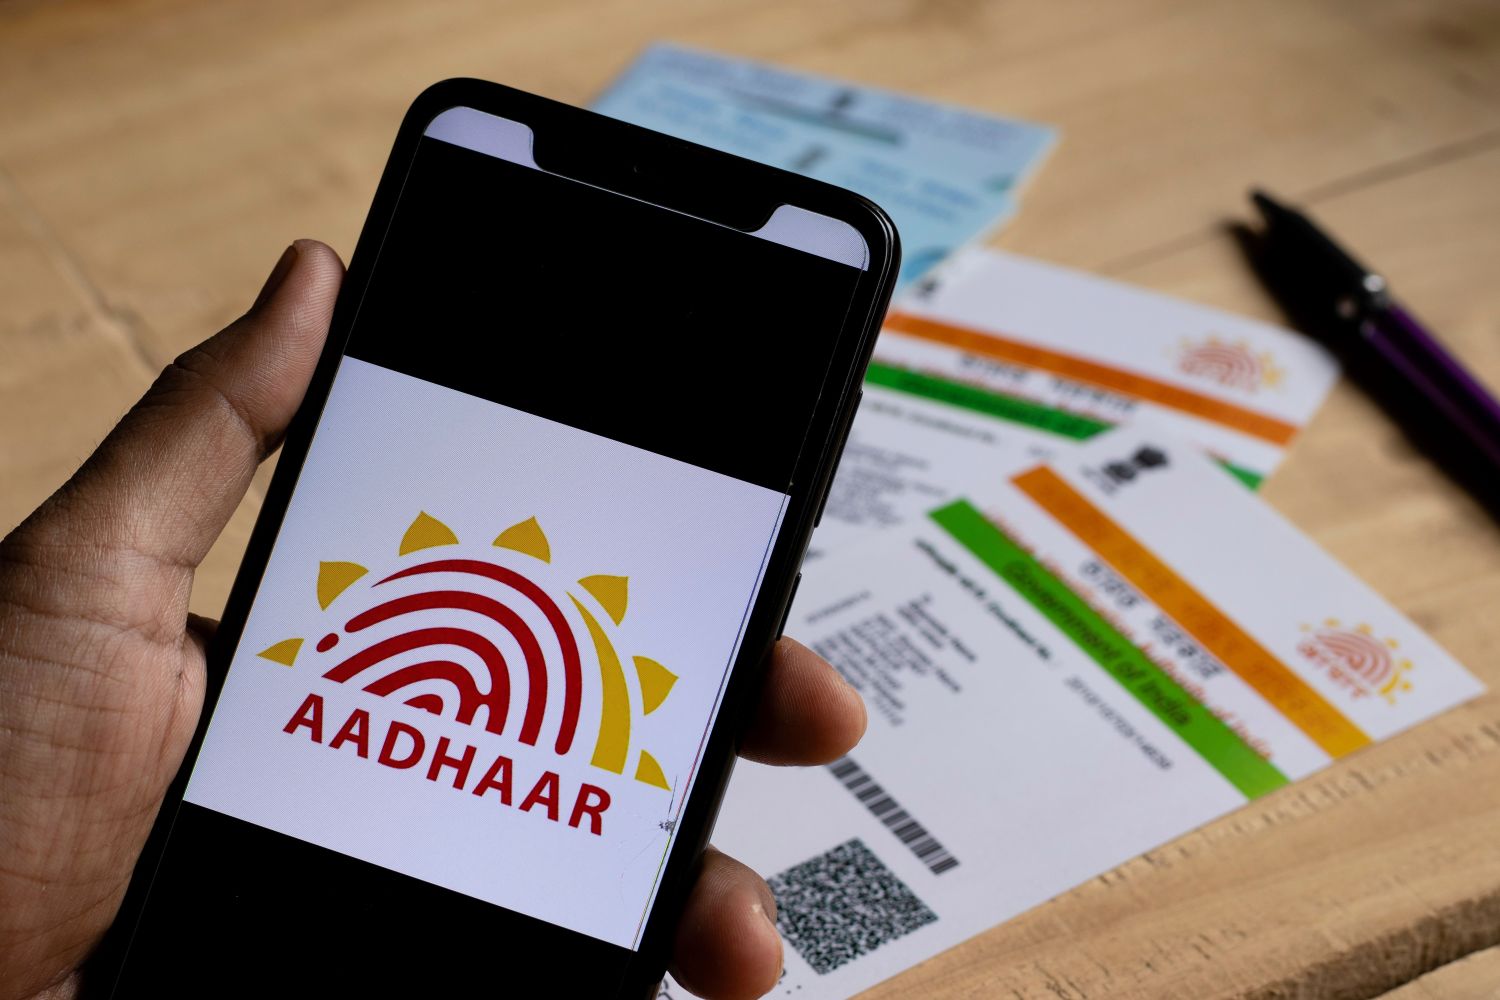 Birbhum, West Bengal / India - 18th August 2020: Aadhaar and PAN cards on wooden floor while a smart phone with mAadhaar app held in hand